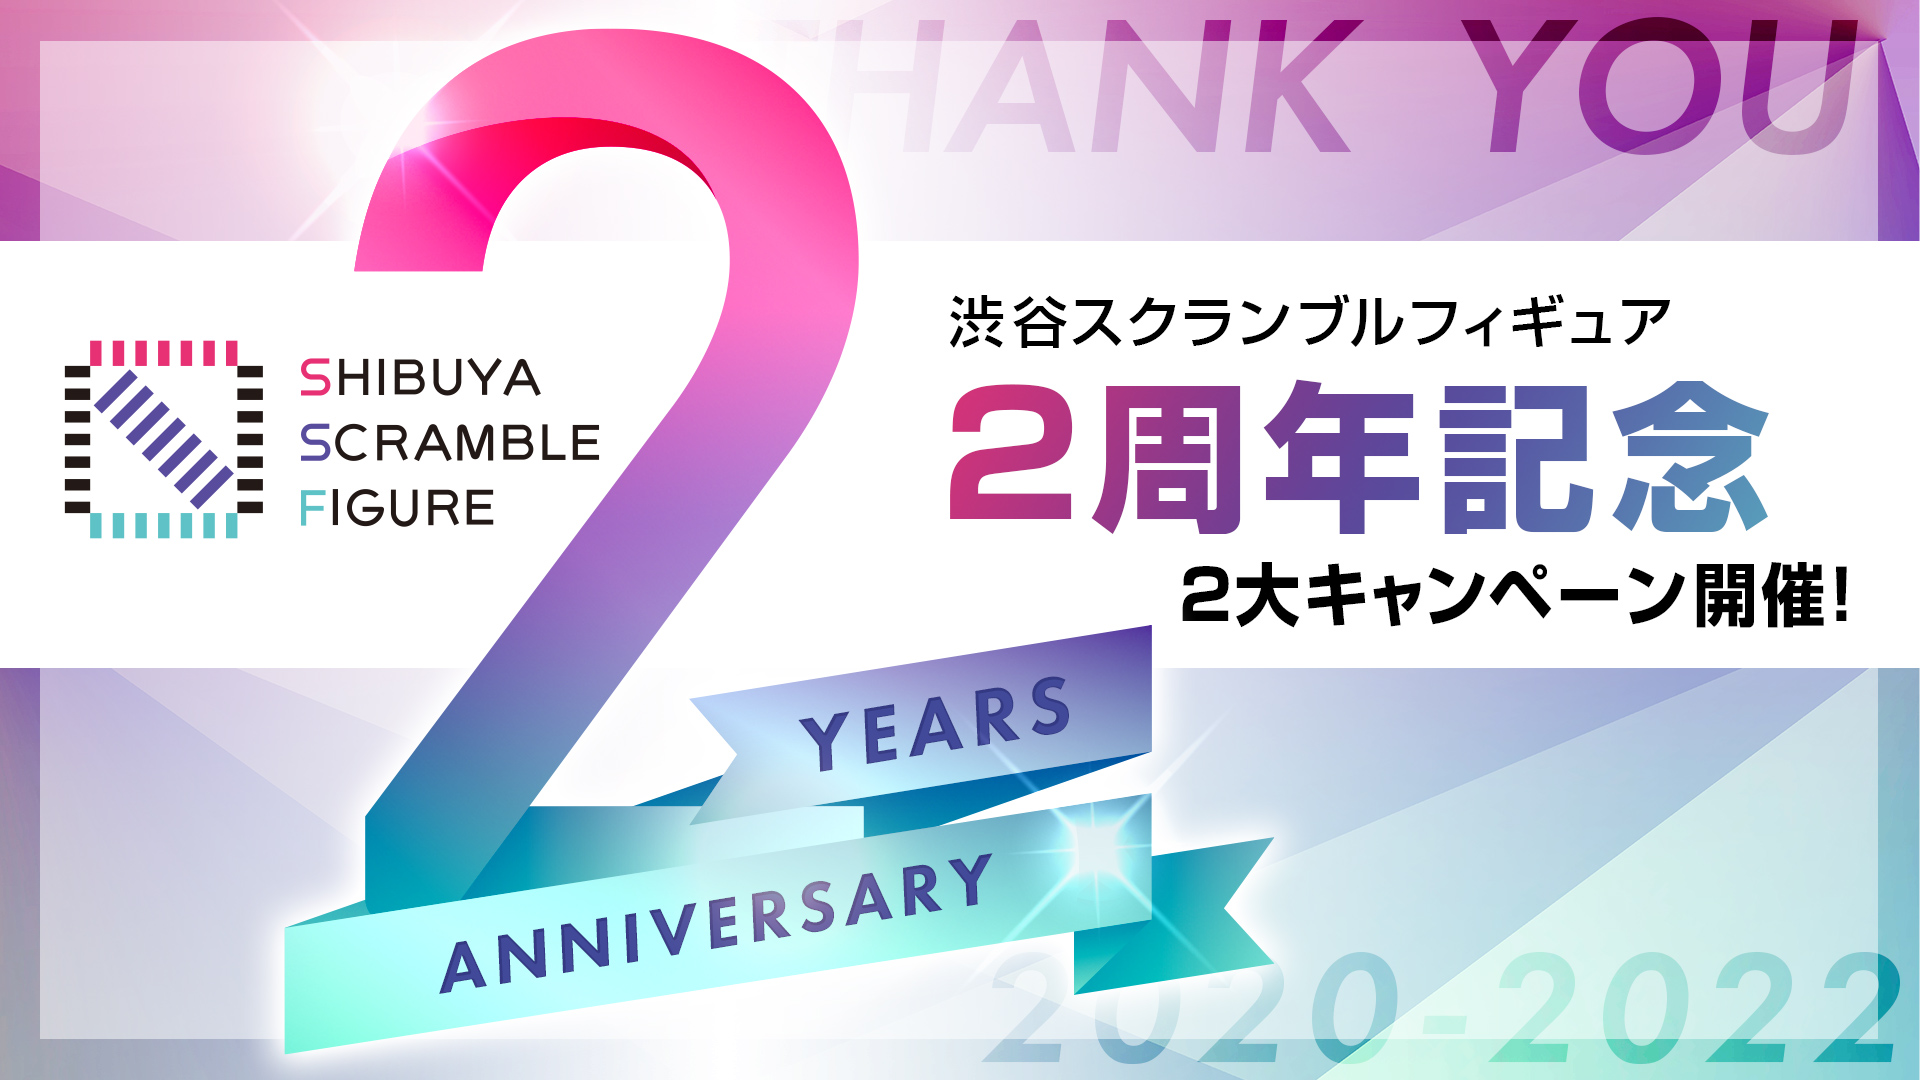 SHIBUYA SCRAMBLE FIGURE2周年を記念して、蔵出し販売とスケール 